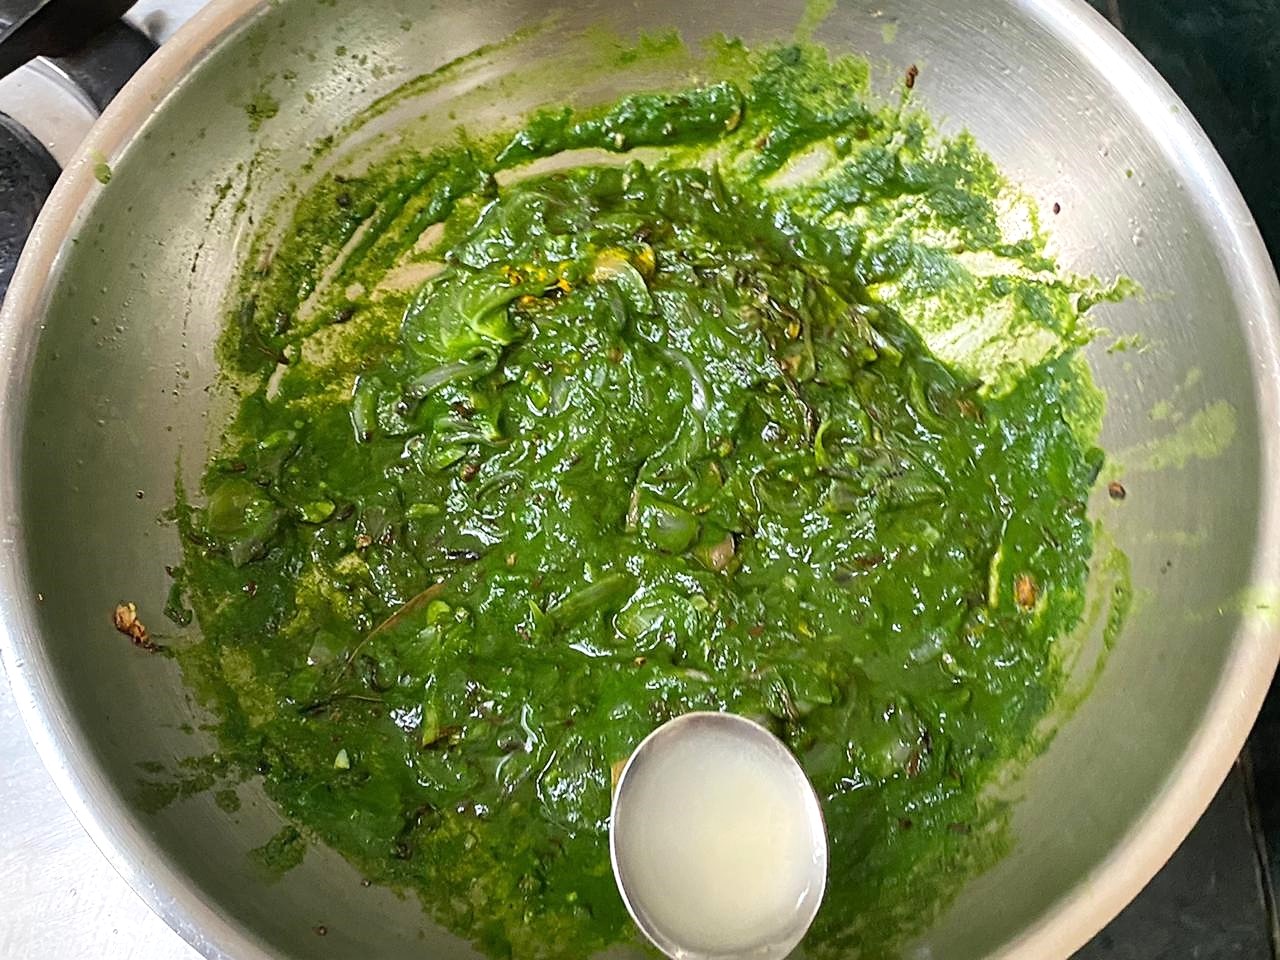 Spinach Rice Recipe